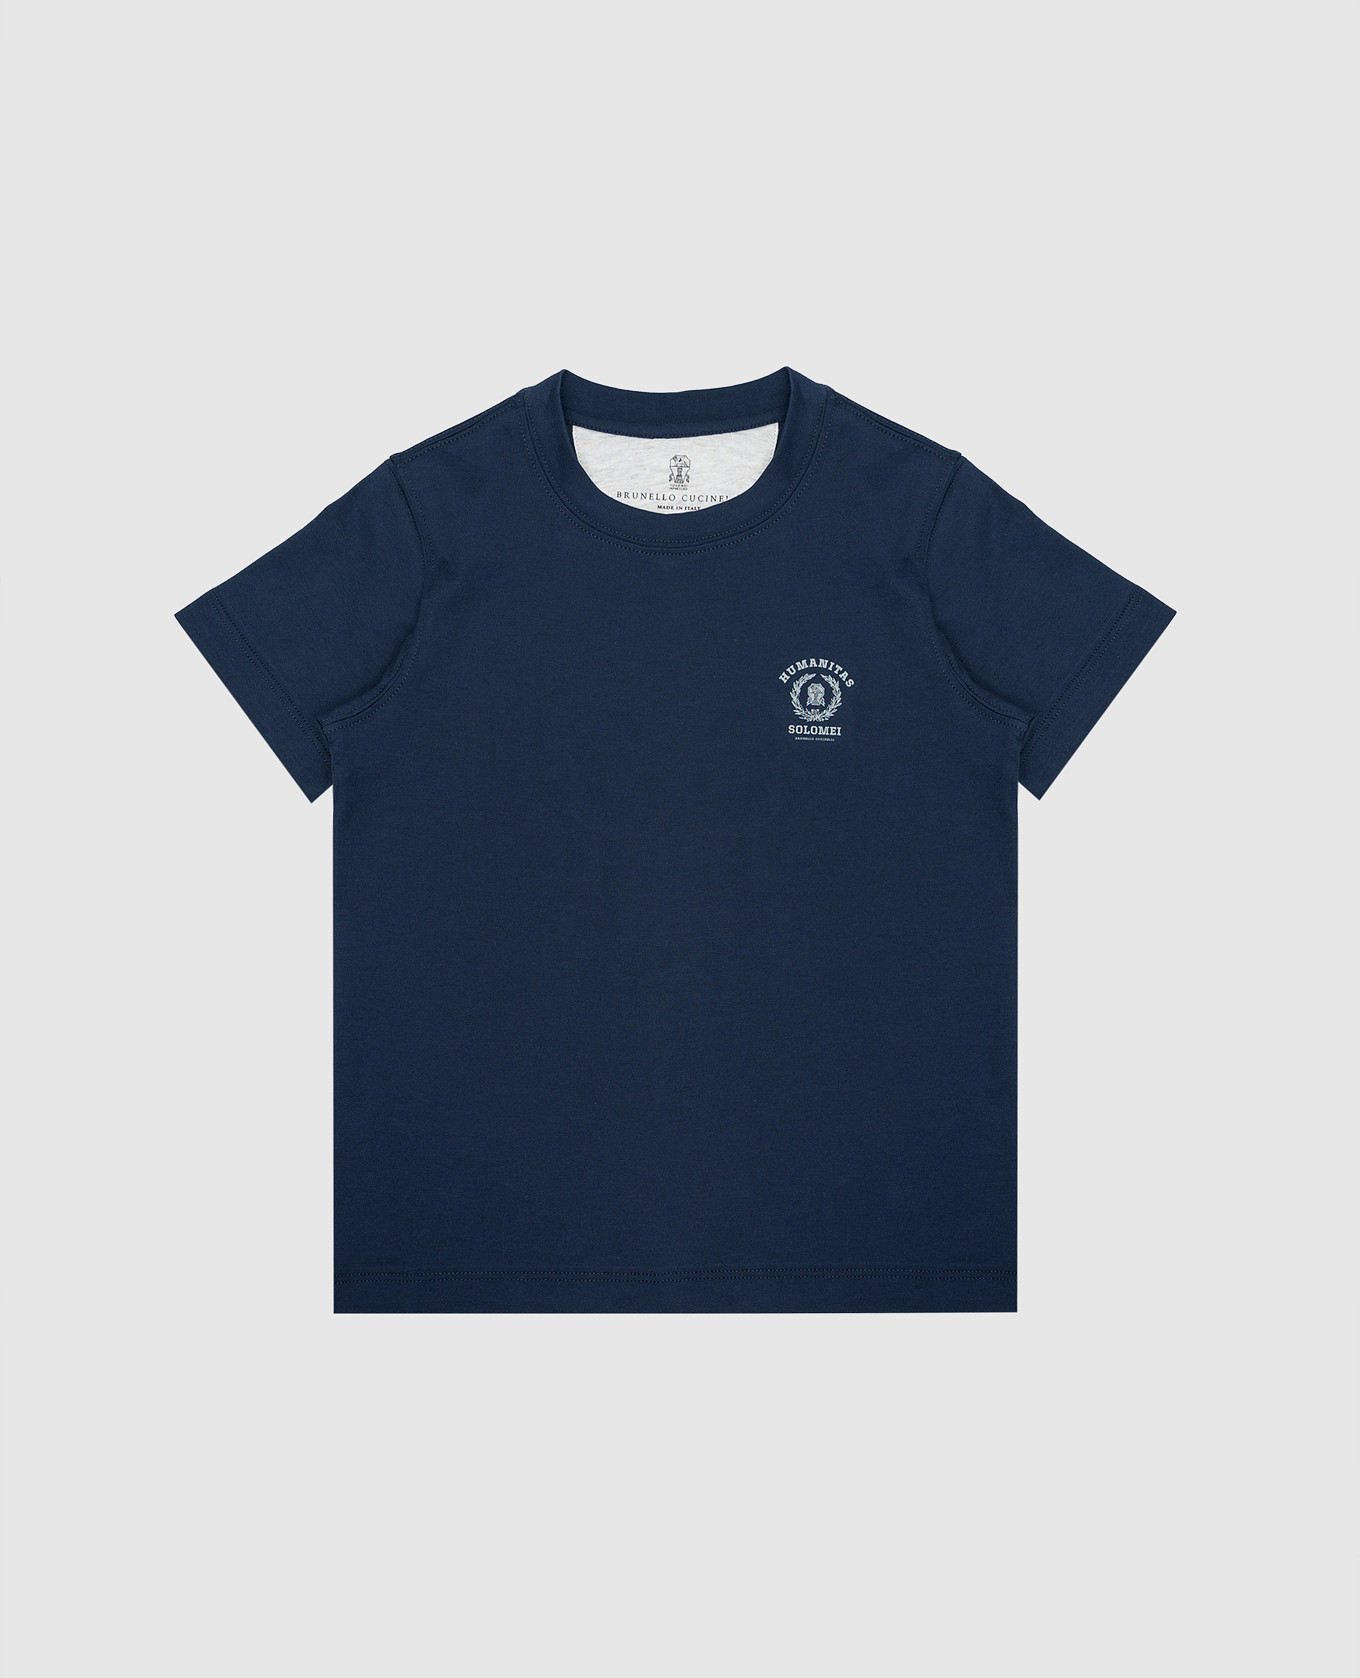 Children's blue t-shirt with a logo